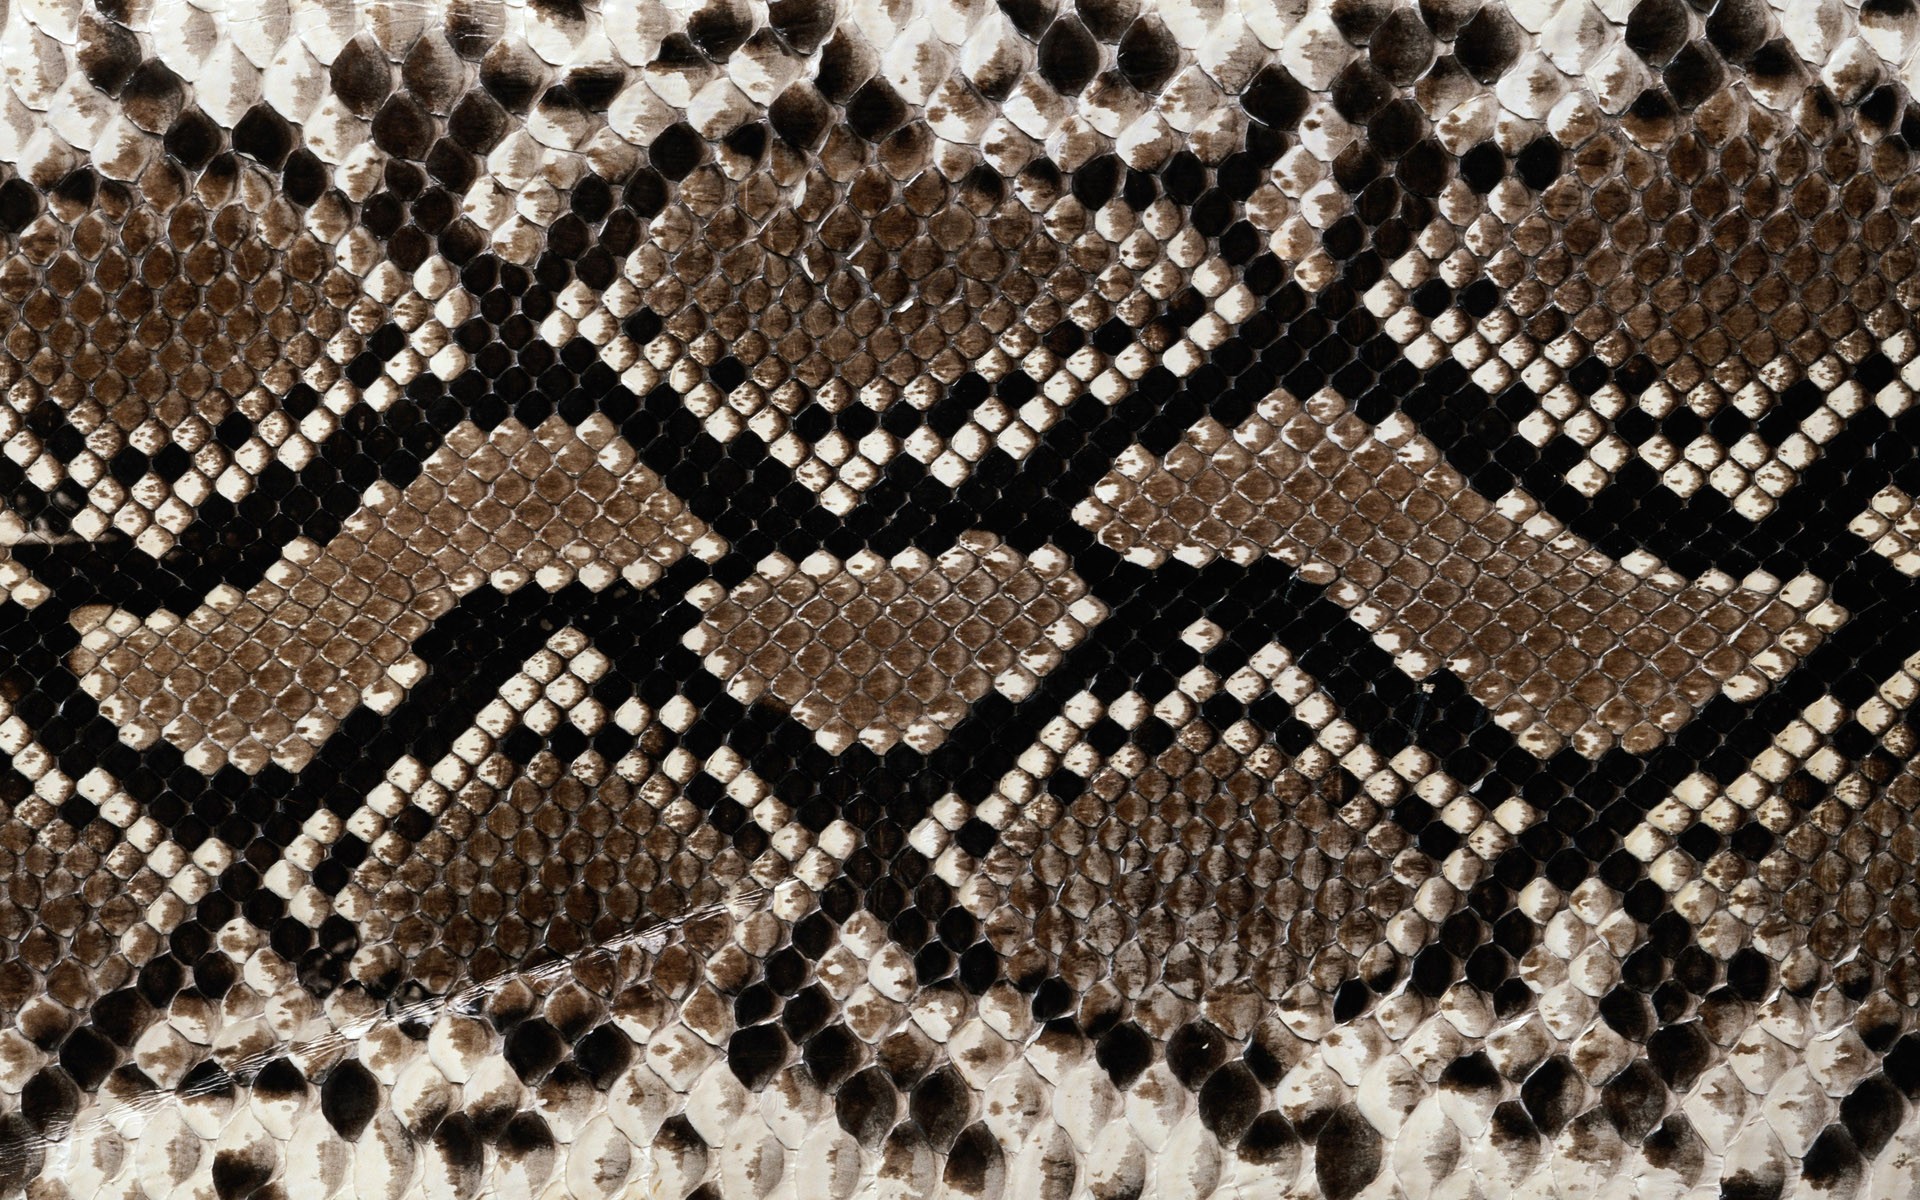 HD Wallpapers of Snakes - like Pythons - Vipers - Boas - king cobras